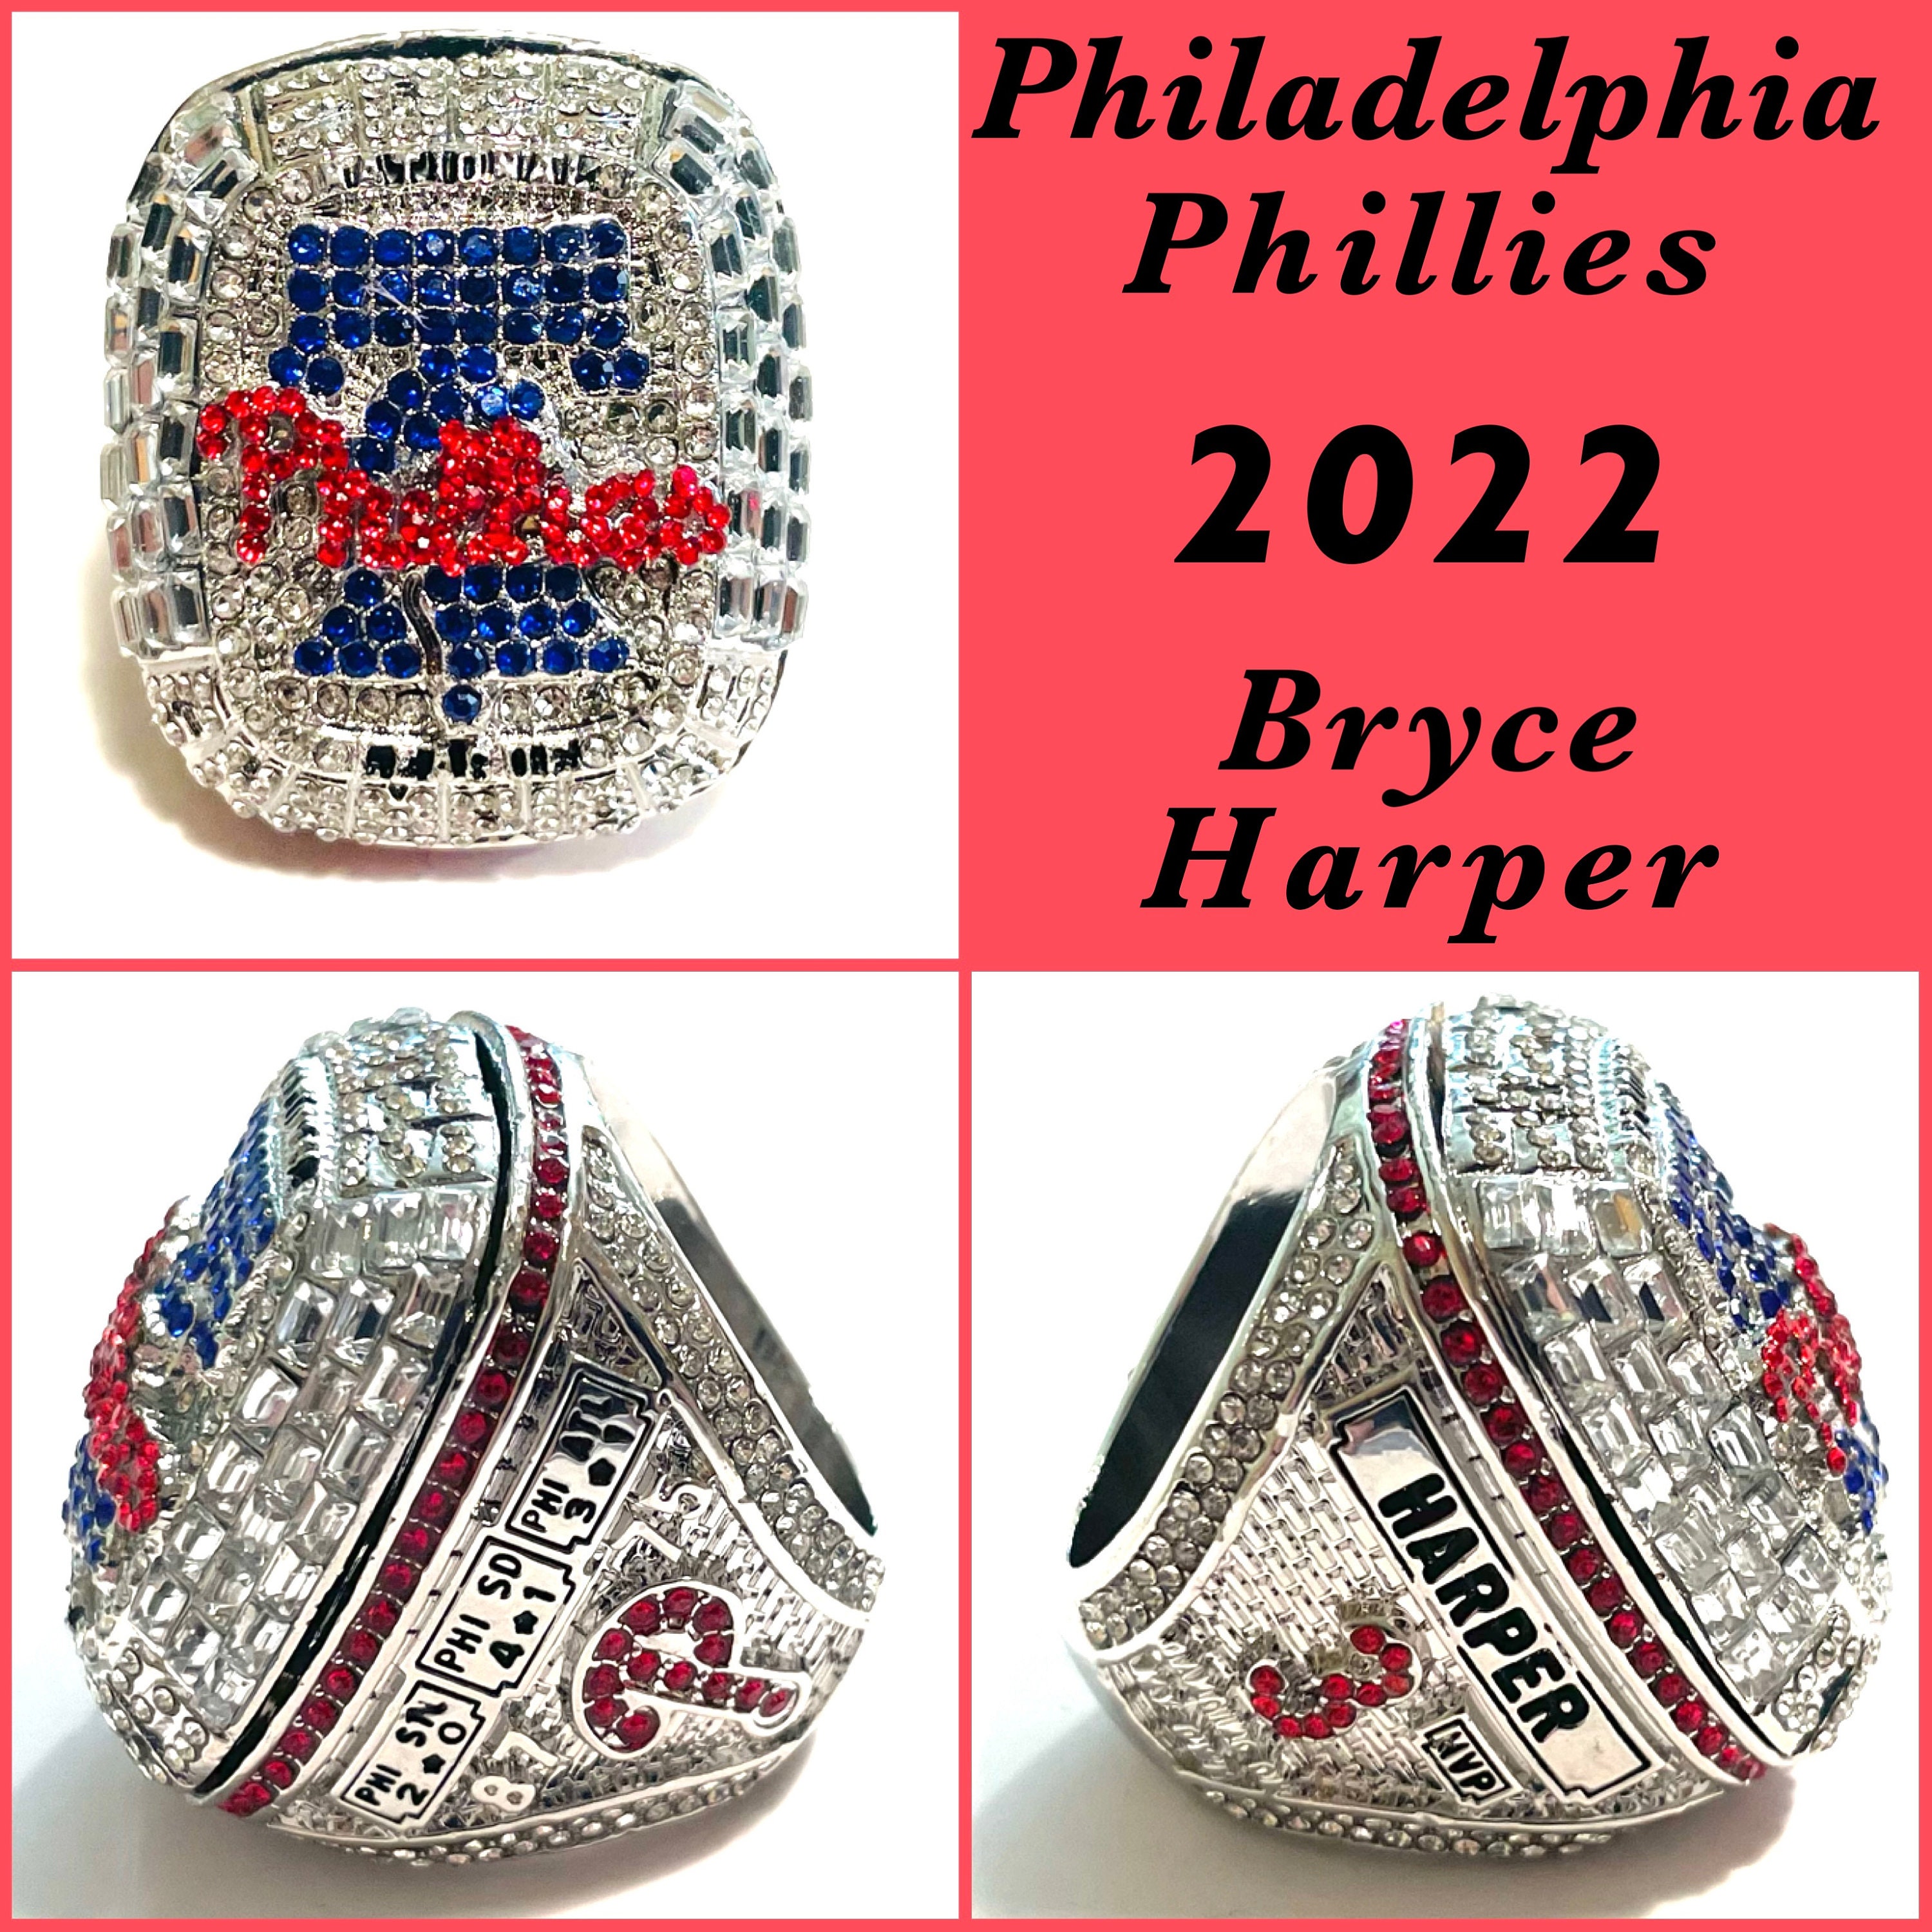 Philadelphia Phillies Bryce Harper 2022 NLCS Championship Ring 